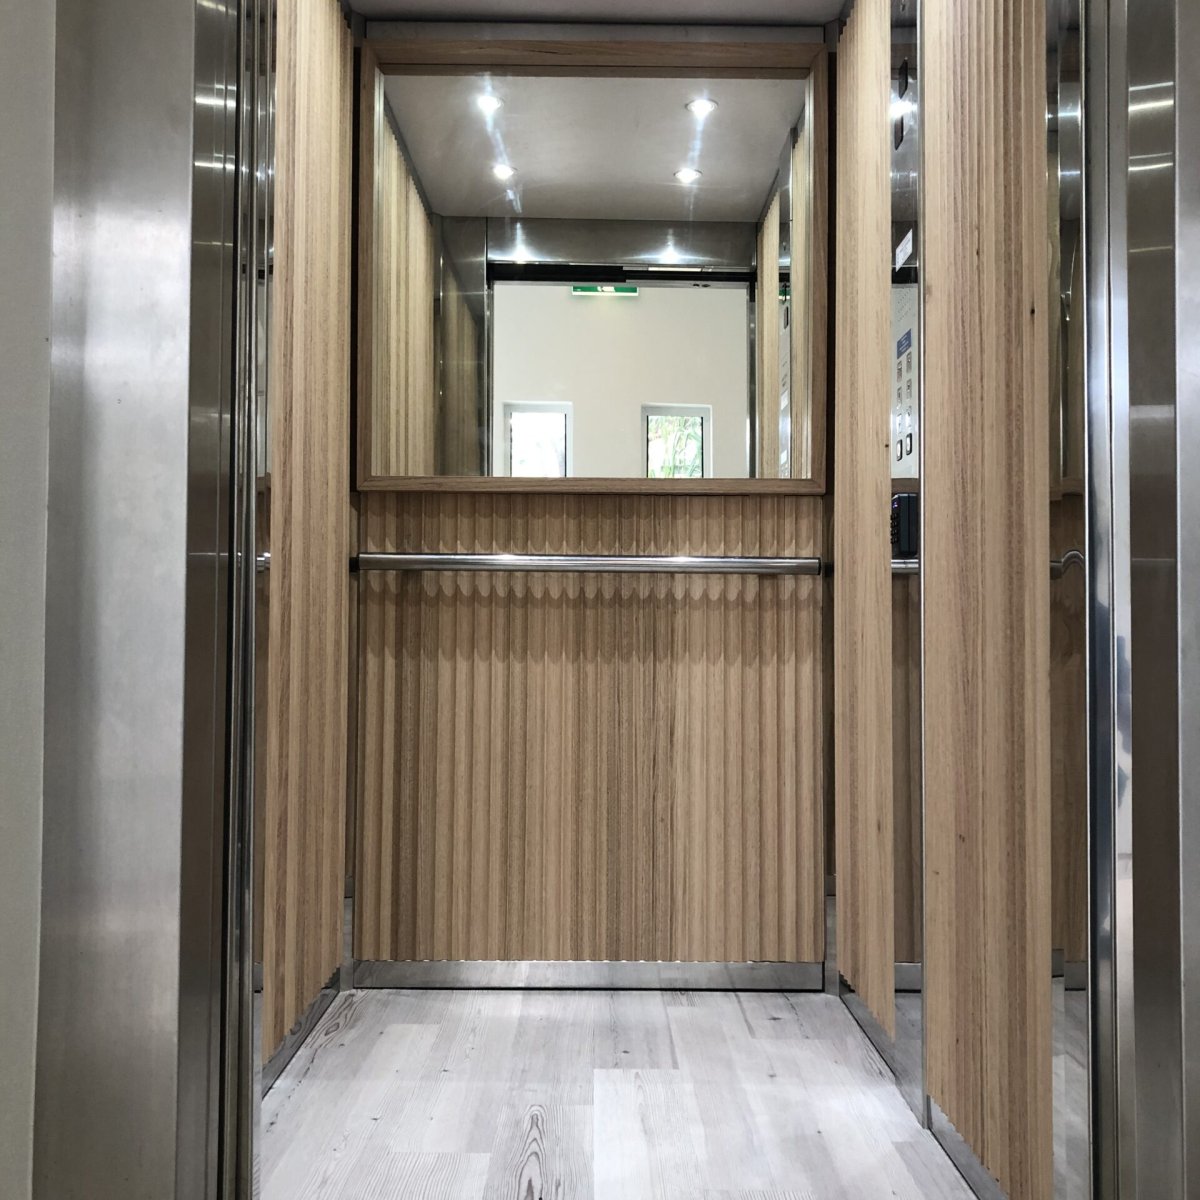  Commercial Elevators Australia | Simplex Elevators Gallery Image 6